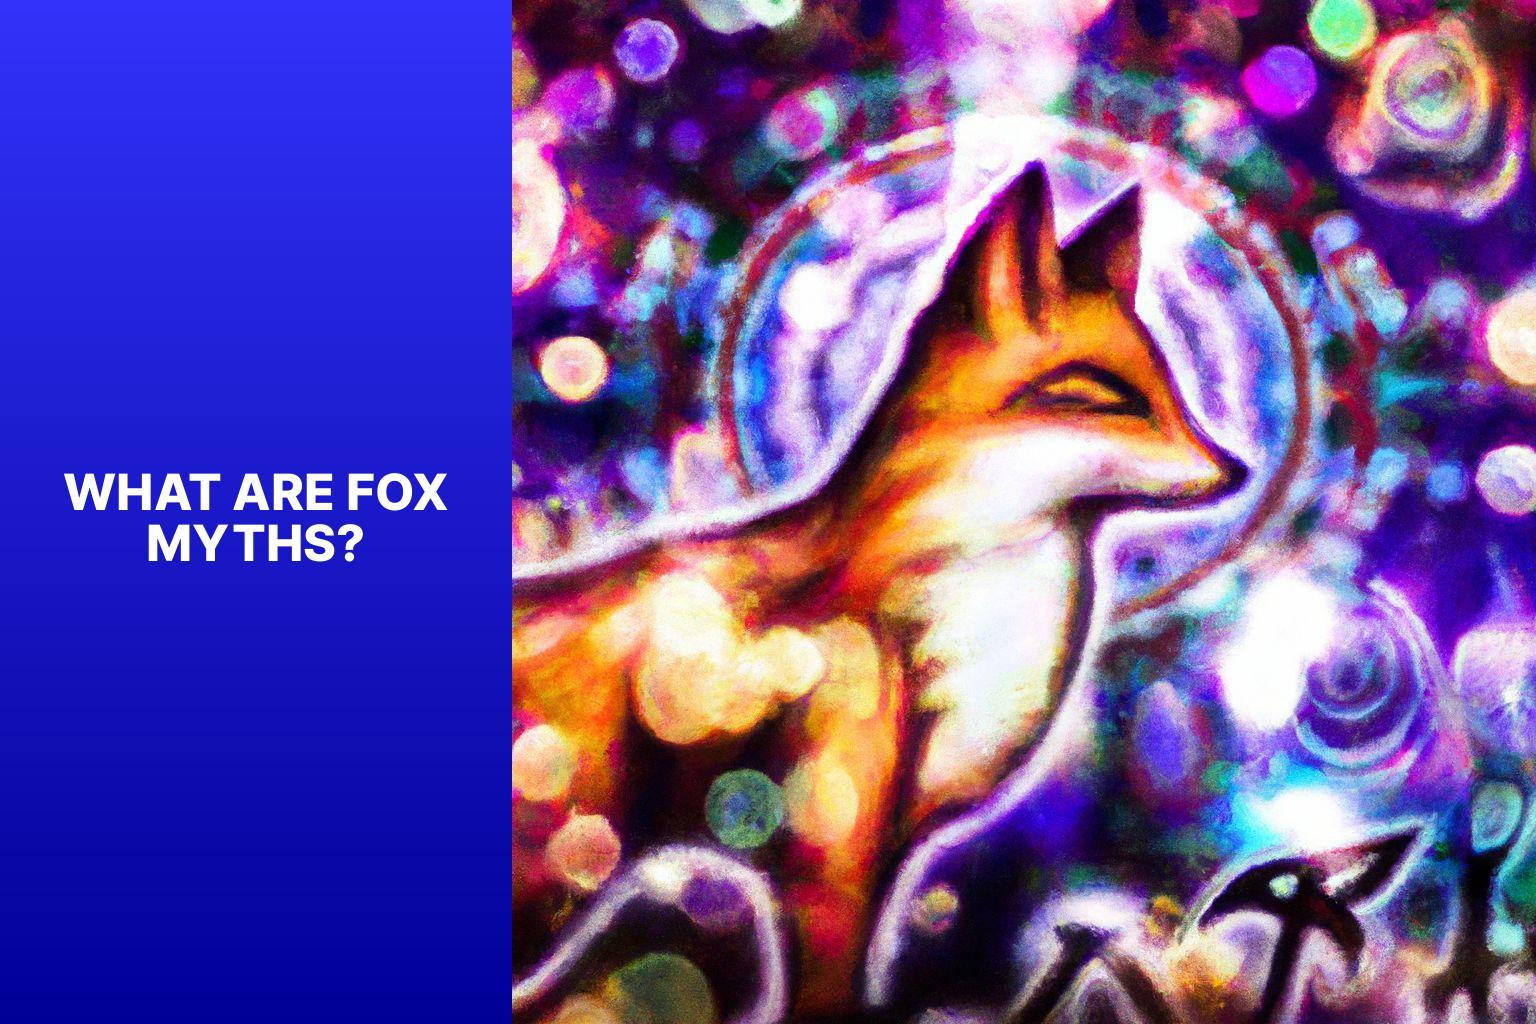 What Are Fox Myths? - Fox Myths in Pseudoscience 